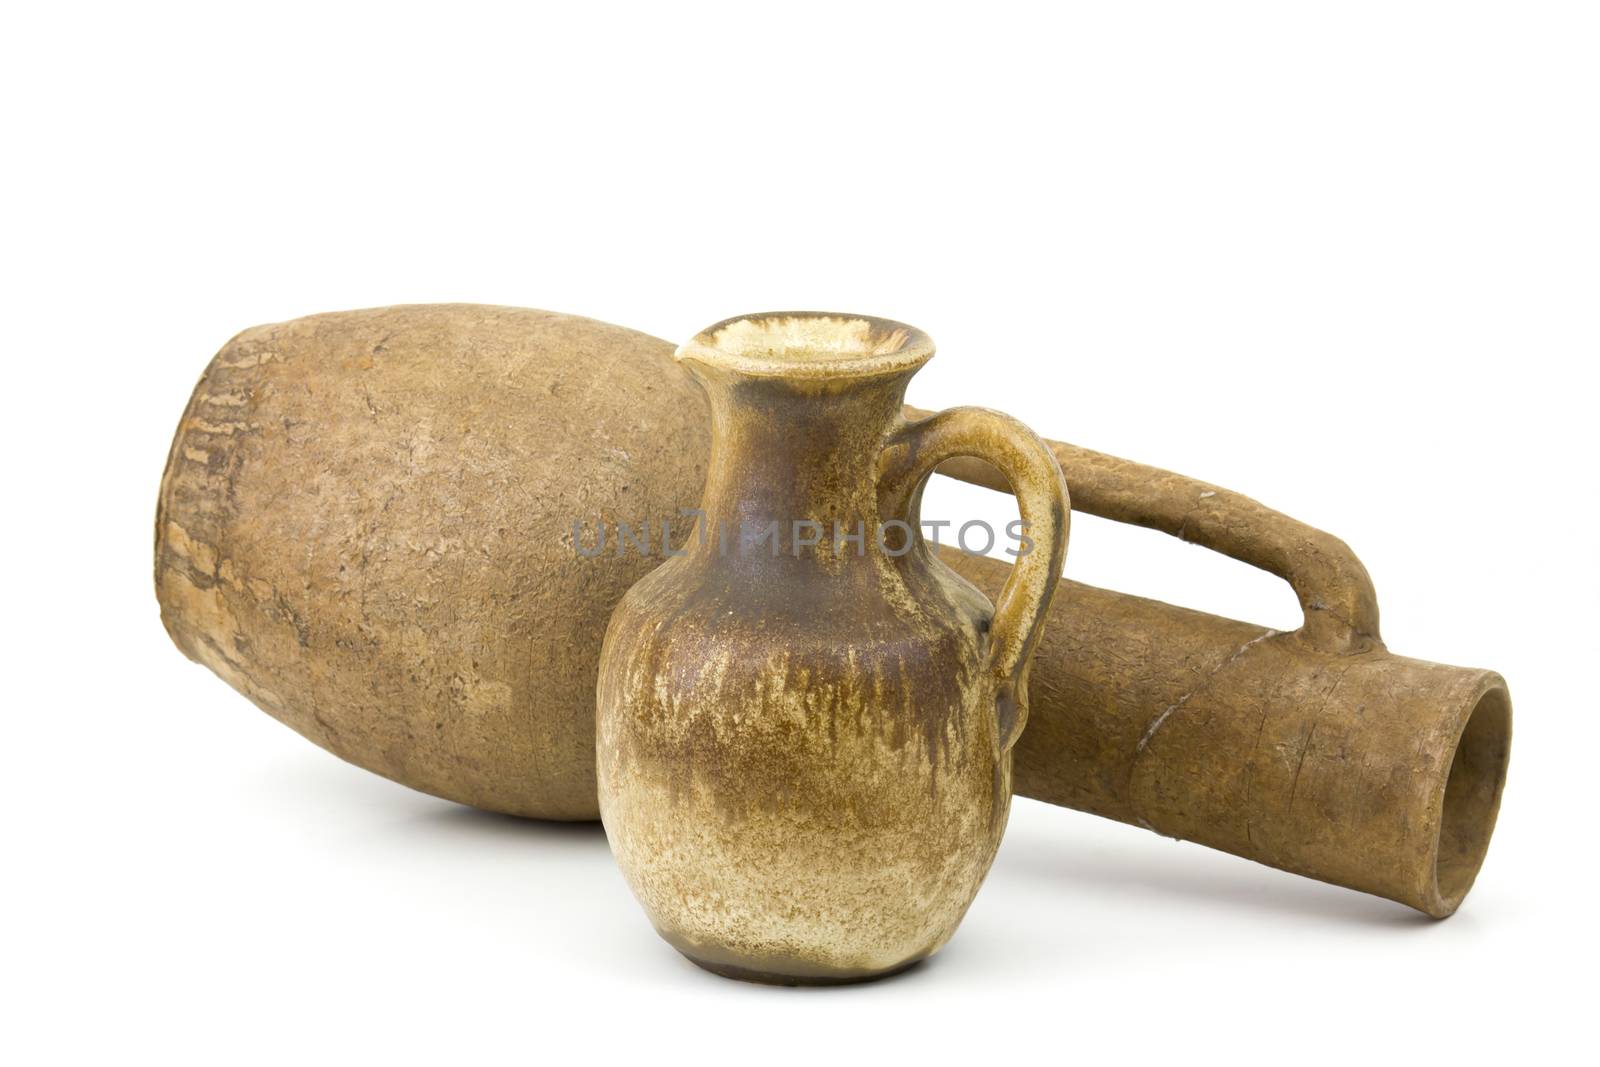 Clay pots, old ceramic vases by miradrozdowski